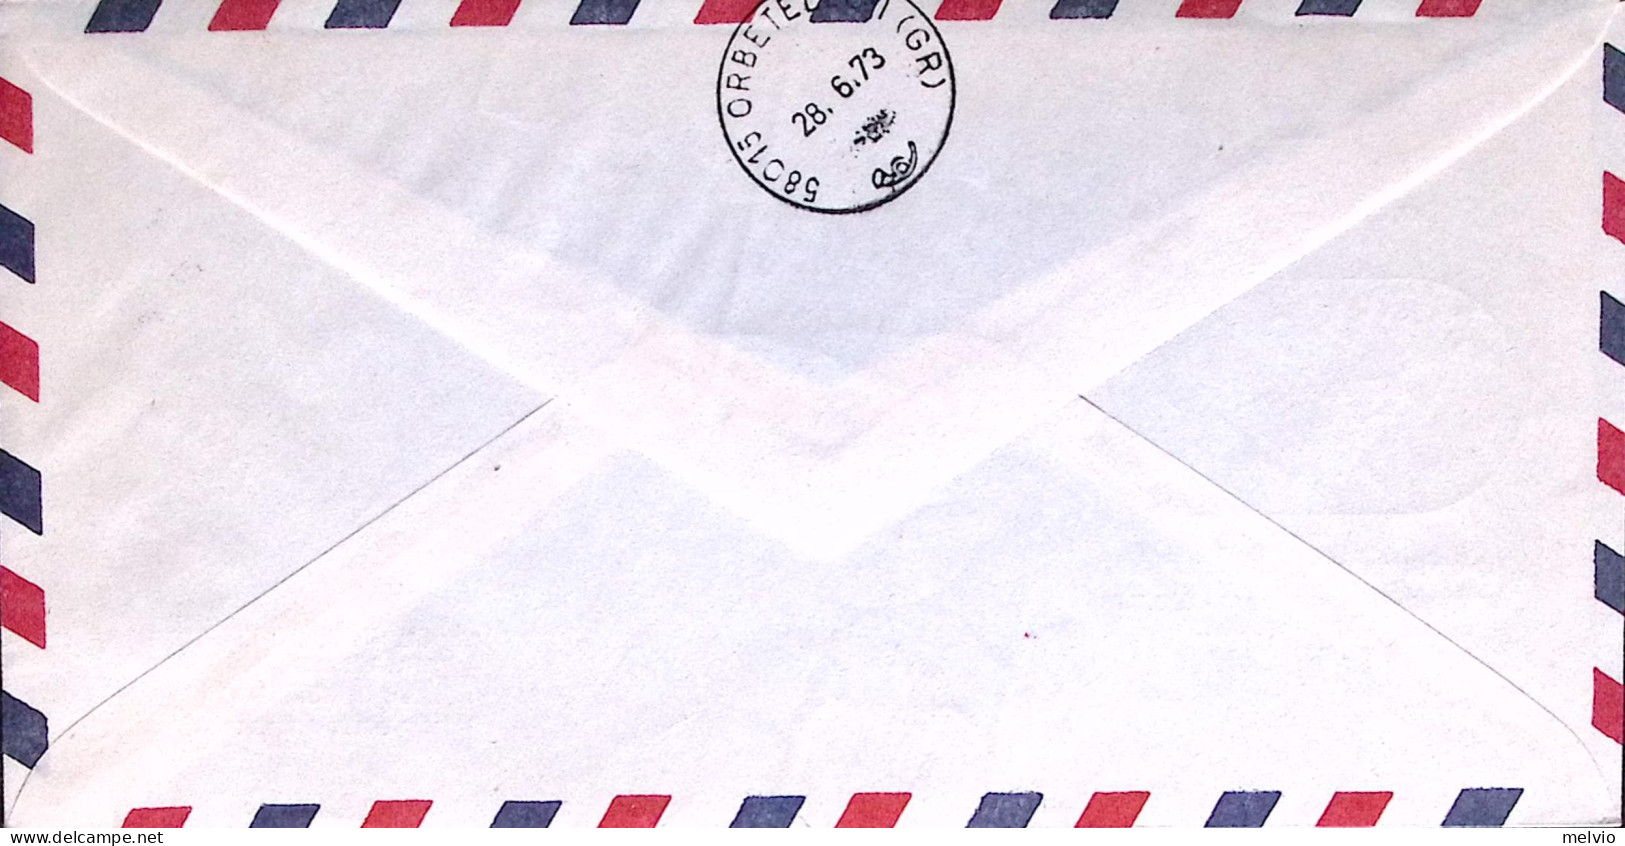 1973-Vaticano Aerogramma Collegamento Postale Con Elicottero Senigallia Orbetell - Brieven En Documenten